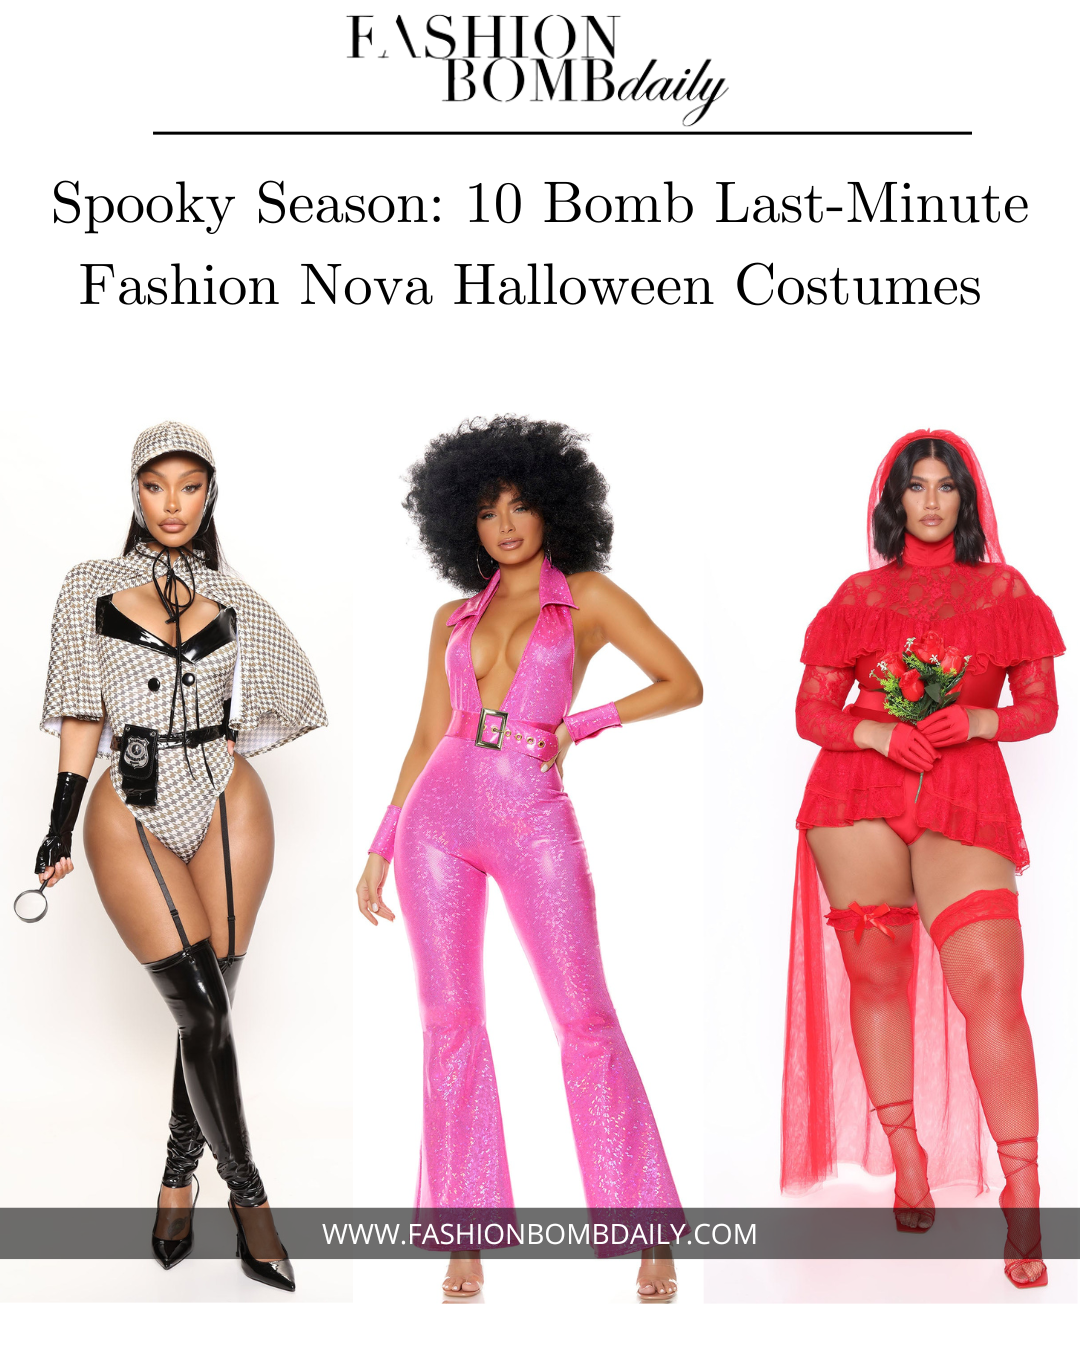 Spooky Season: 10 Bomb Last-Minute Fashion Nova Halloween Costumes